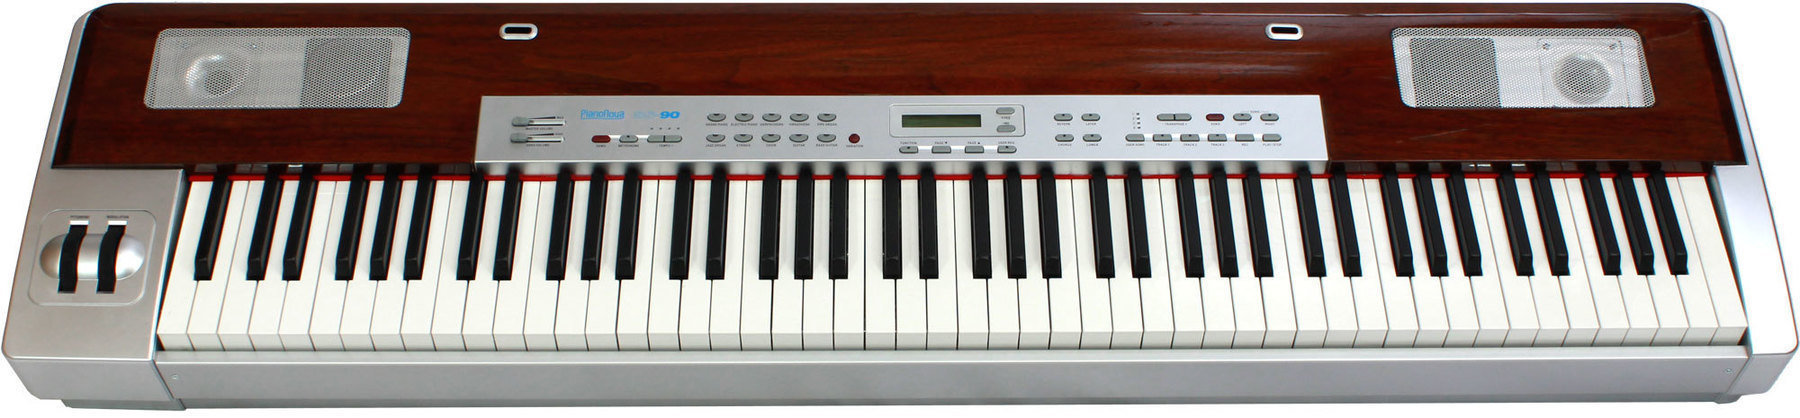 Piano de escenario digital Pianonova SS-90GLOSSY